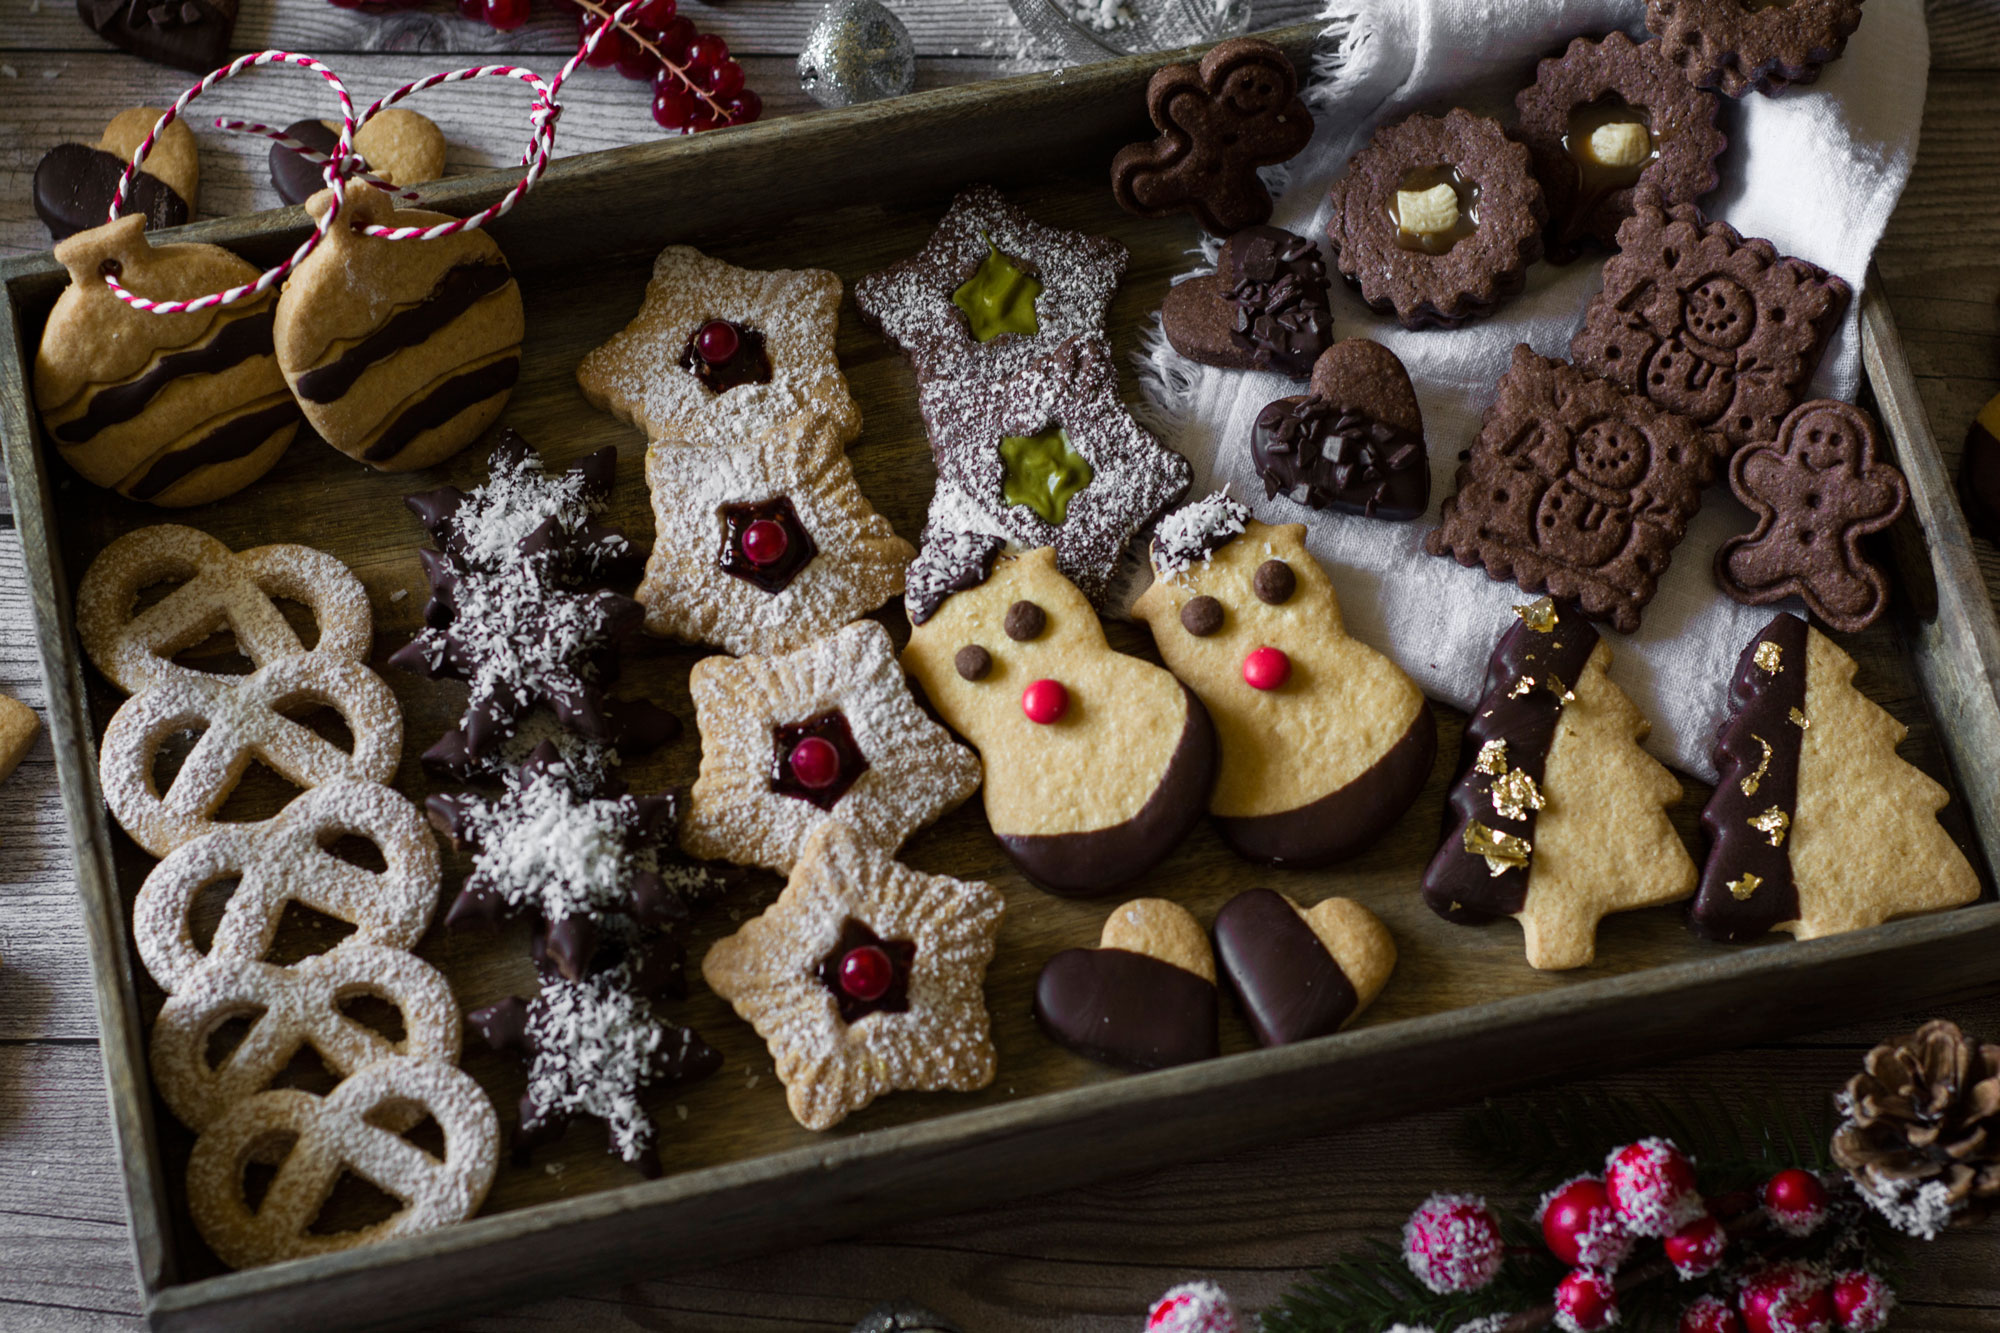 Biscotti di Natale -Senza glutine per tutti i gusti